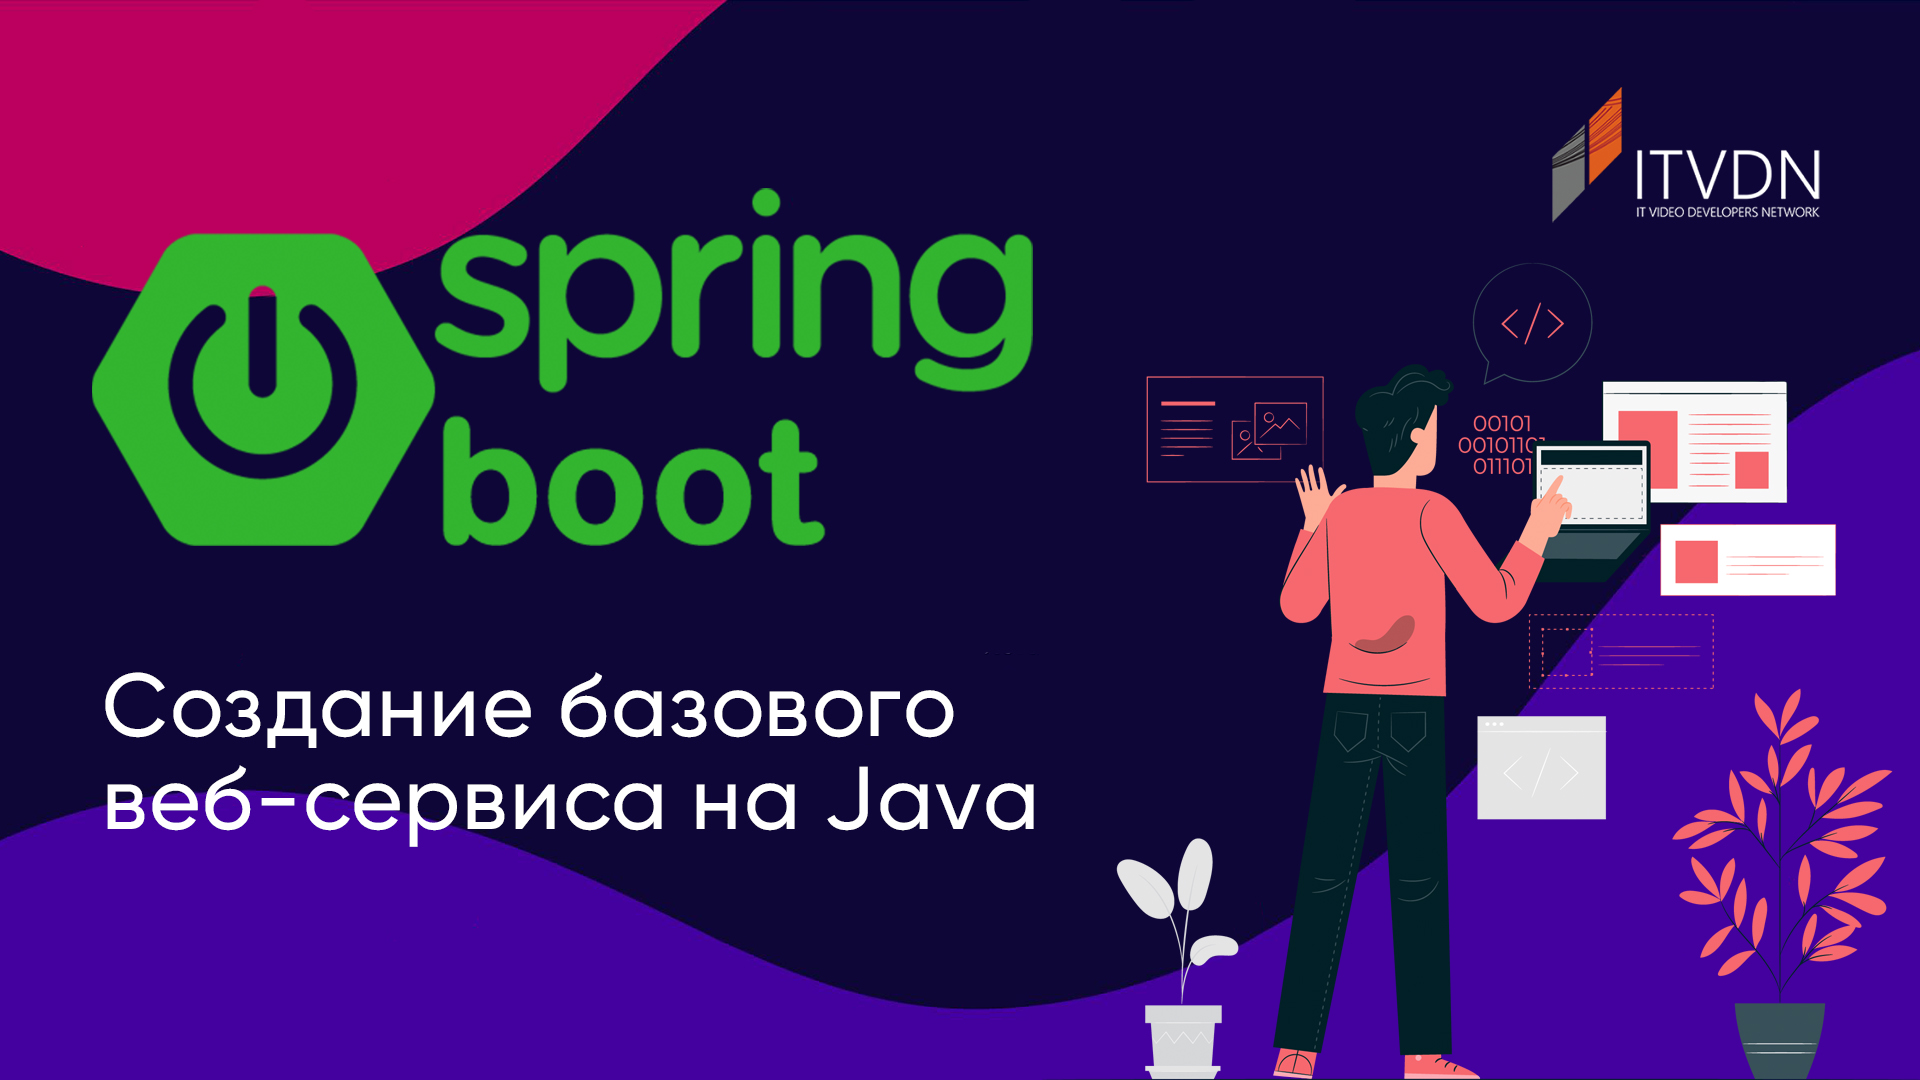 Создание базового Spring boot веб-сервиса на Java.